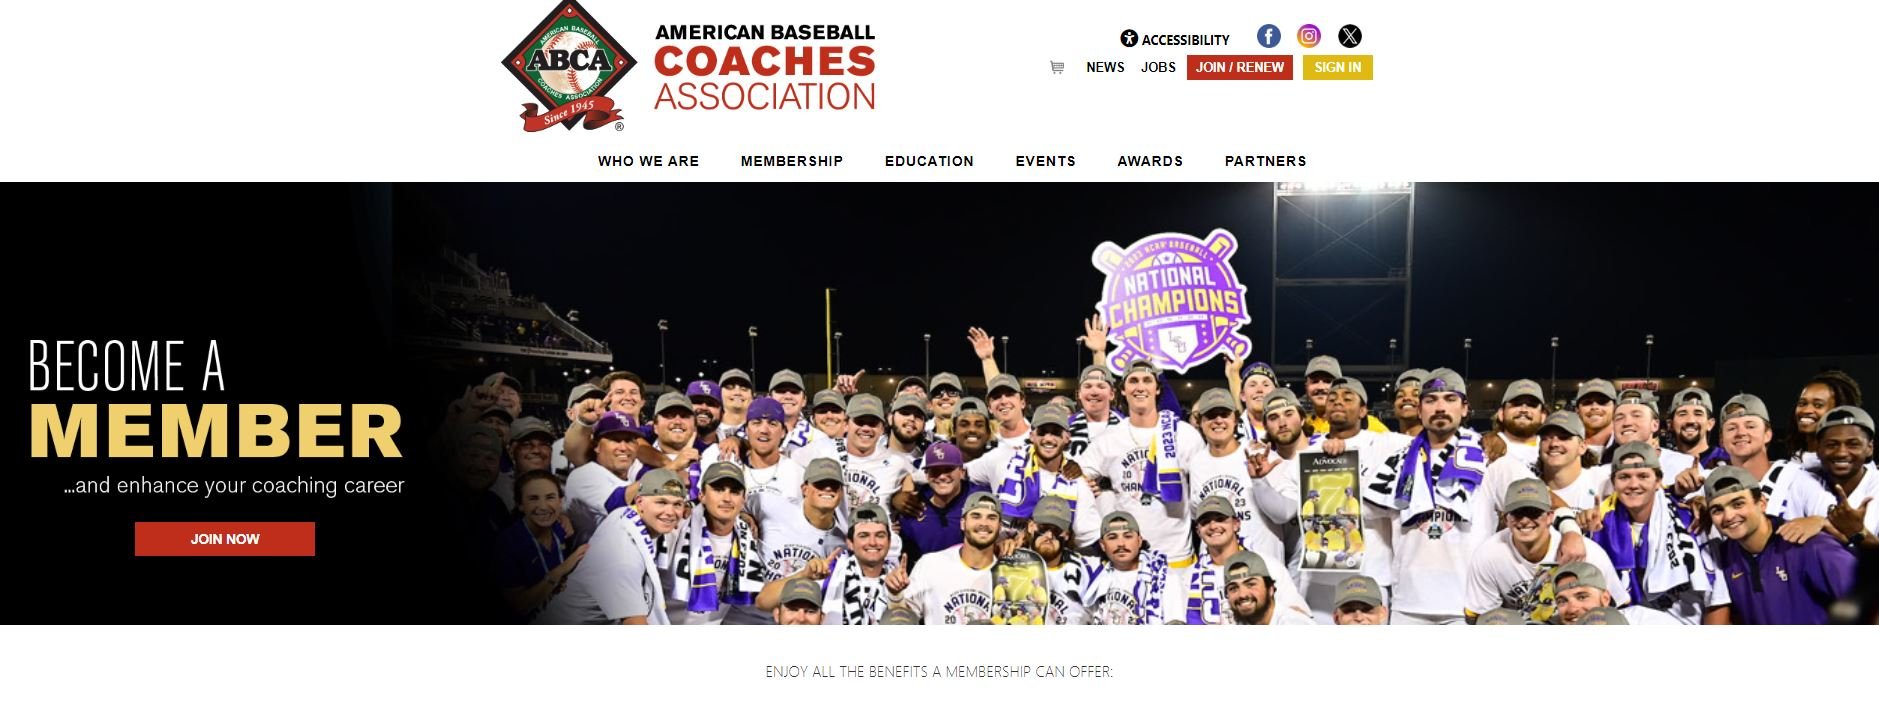 The American Baseball Coaches Association website